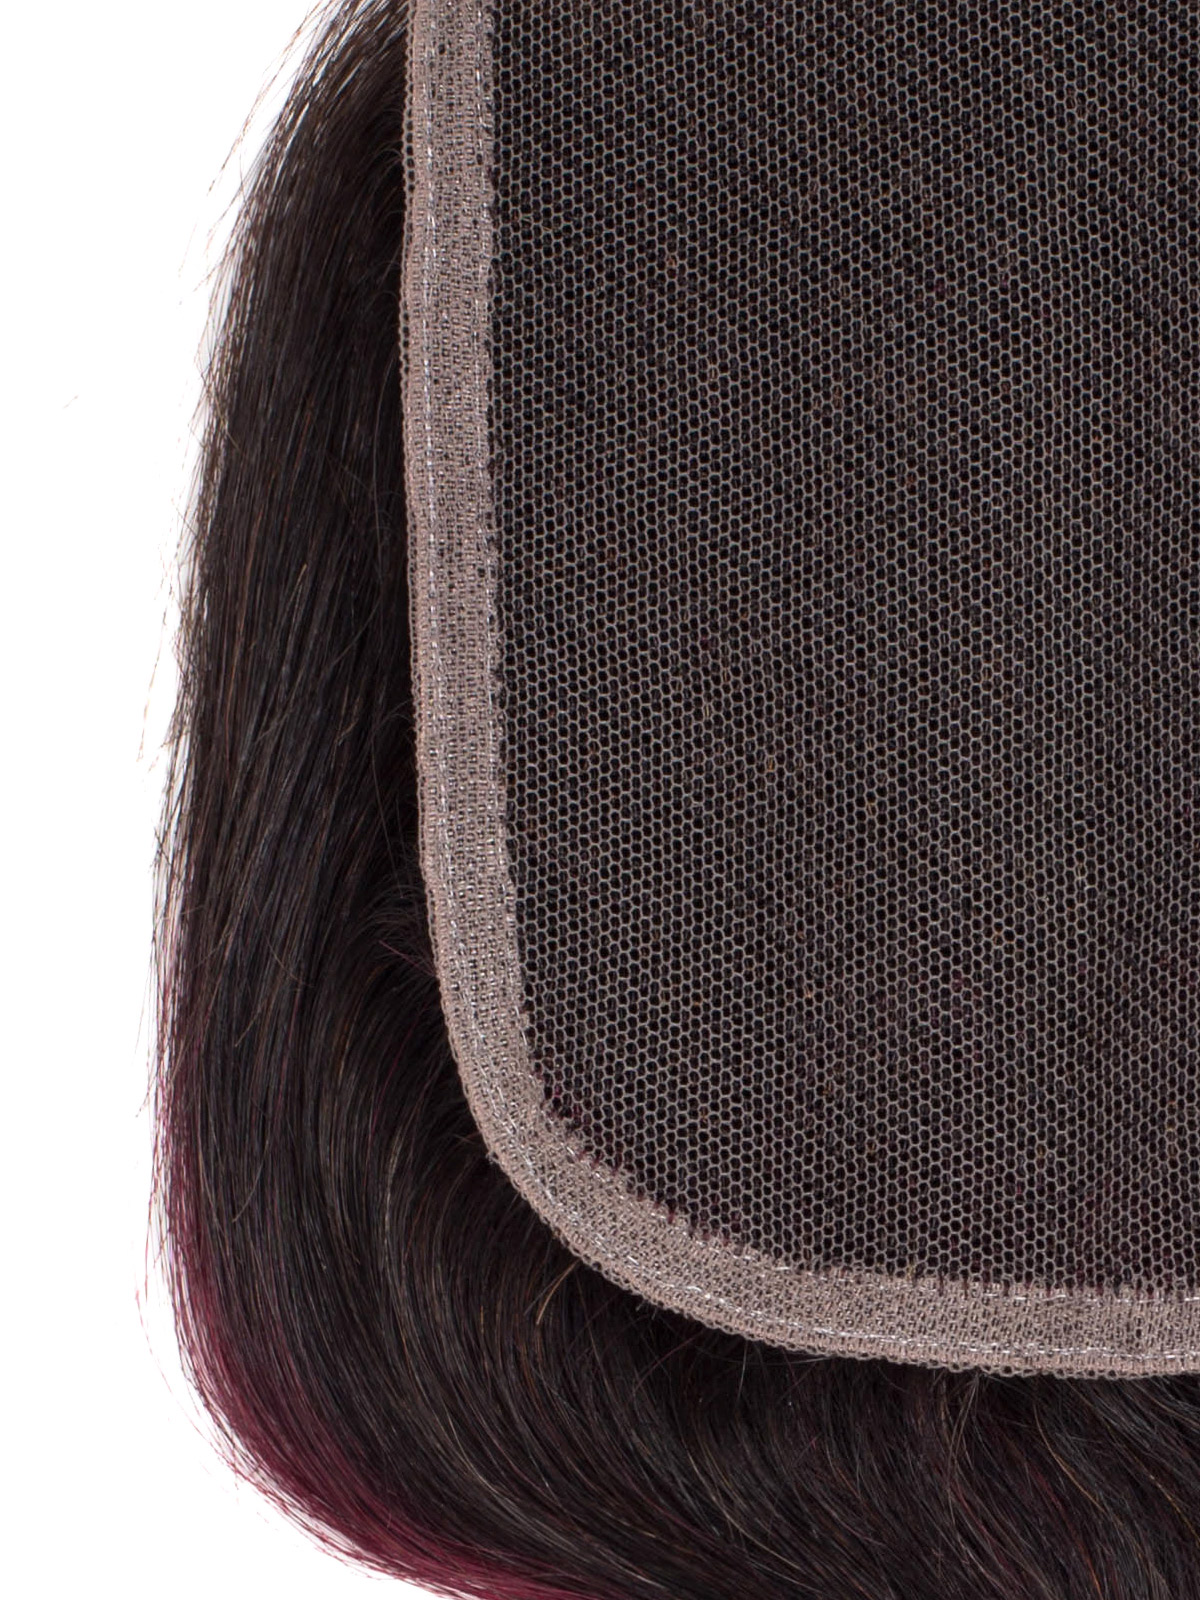 Sahar Essential Virgin Remy Human Hair  Top Lace Closure 4" x 4" (8A) - Body Wave #OT99J 12 inch